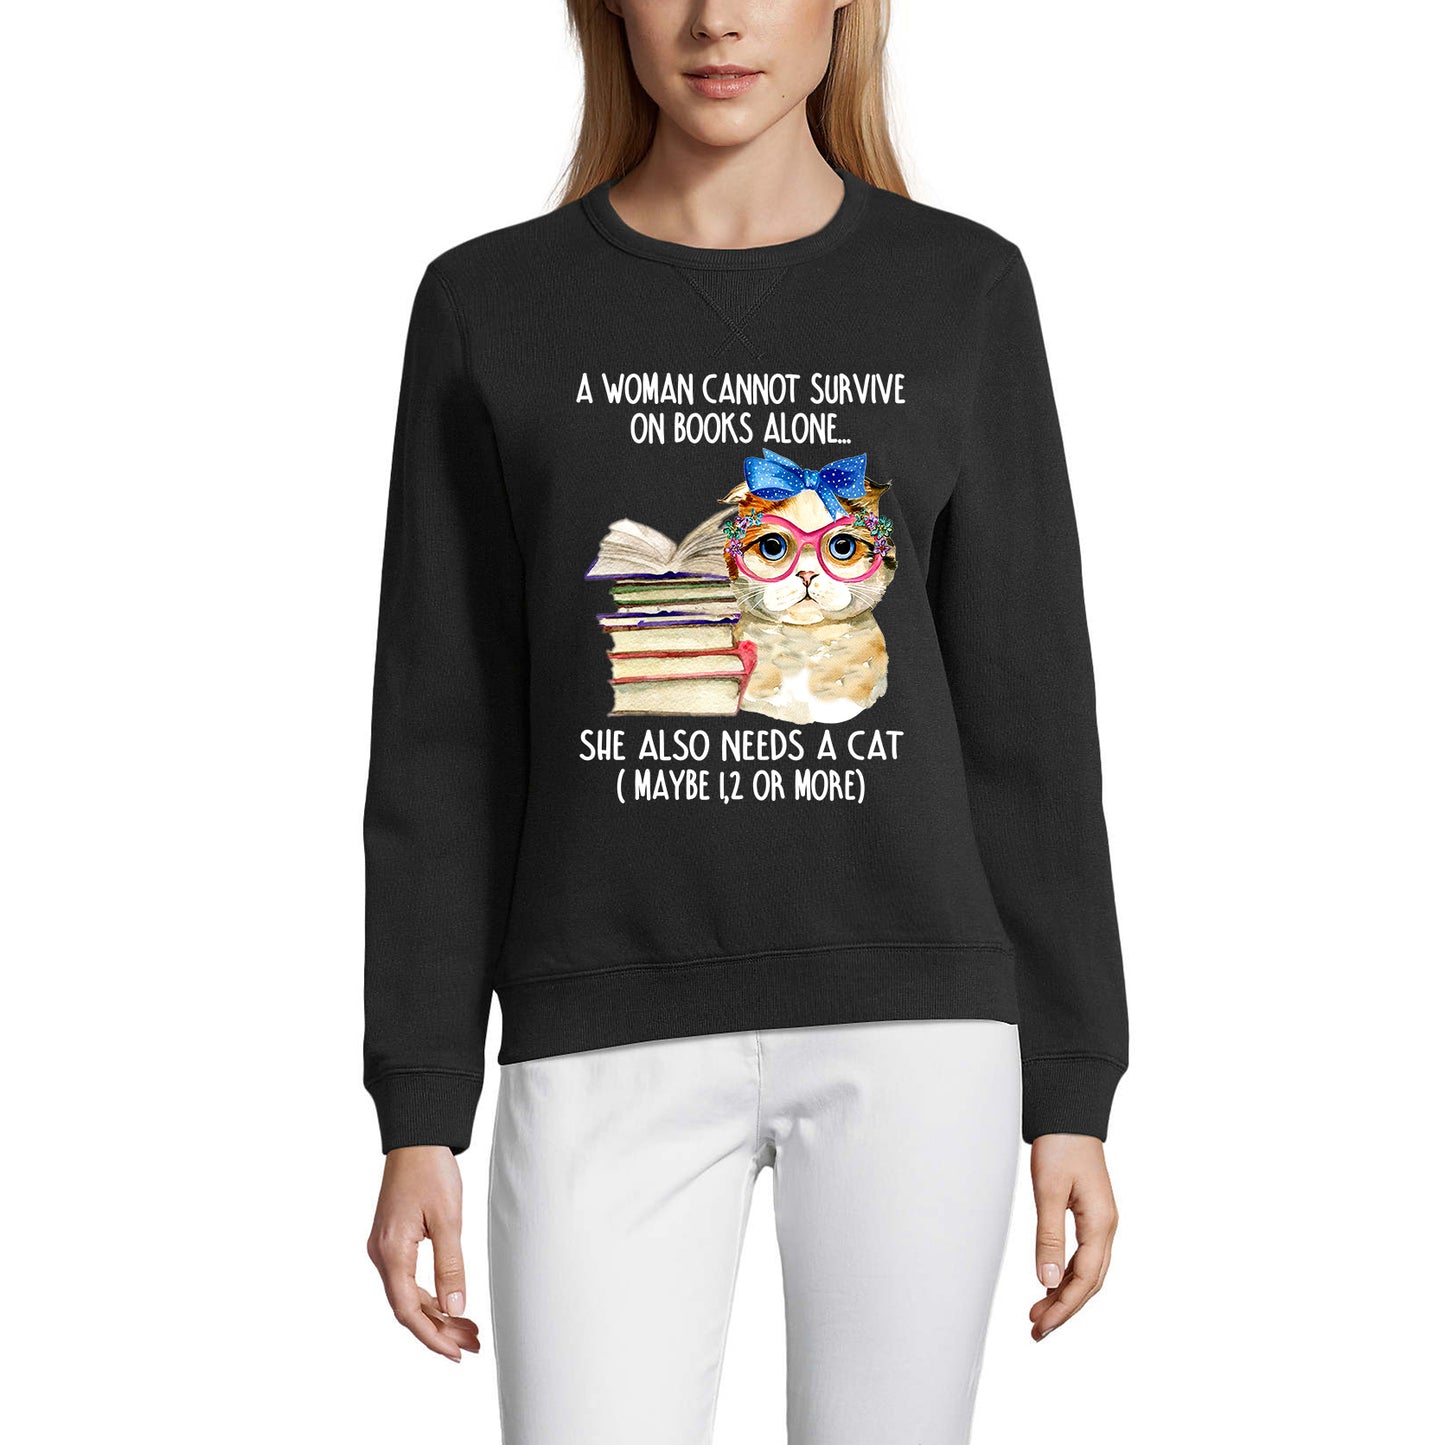 ULTRABASIC Women's Sweatshirt She Also Needs Cat - Cute Cat With Books